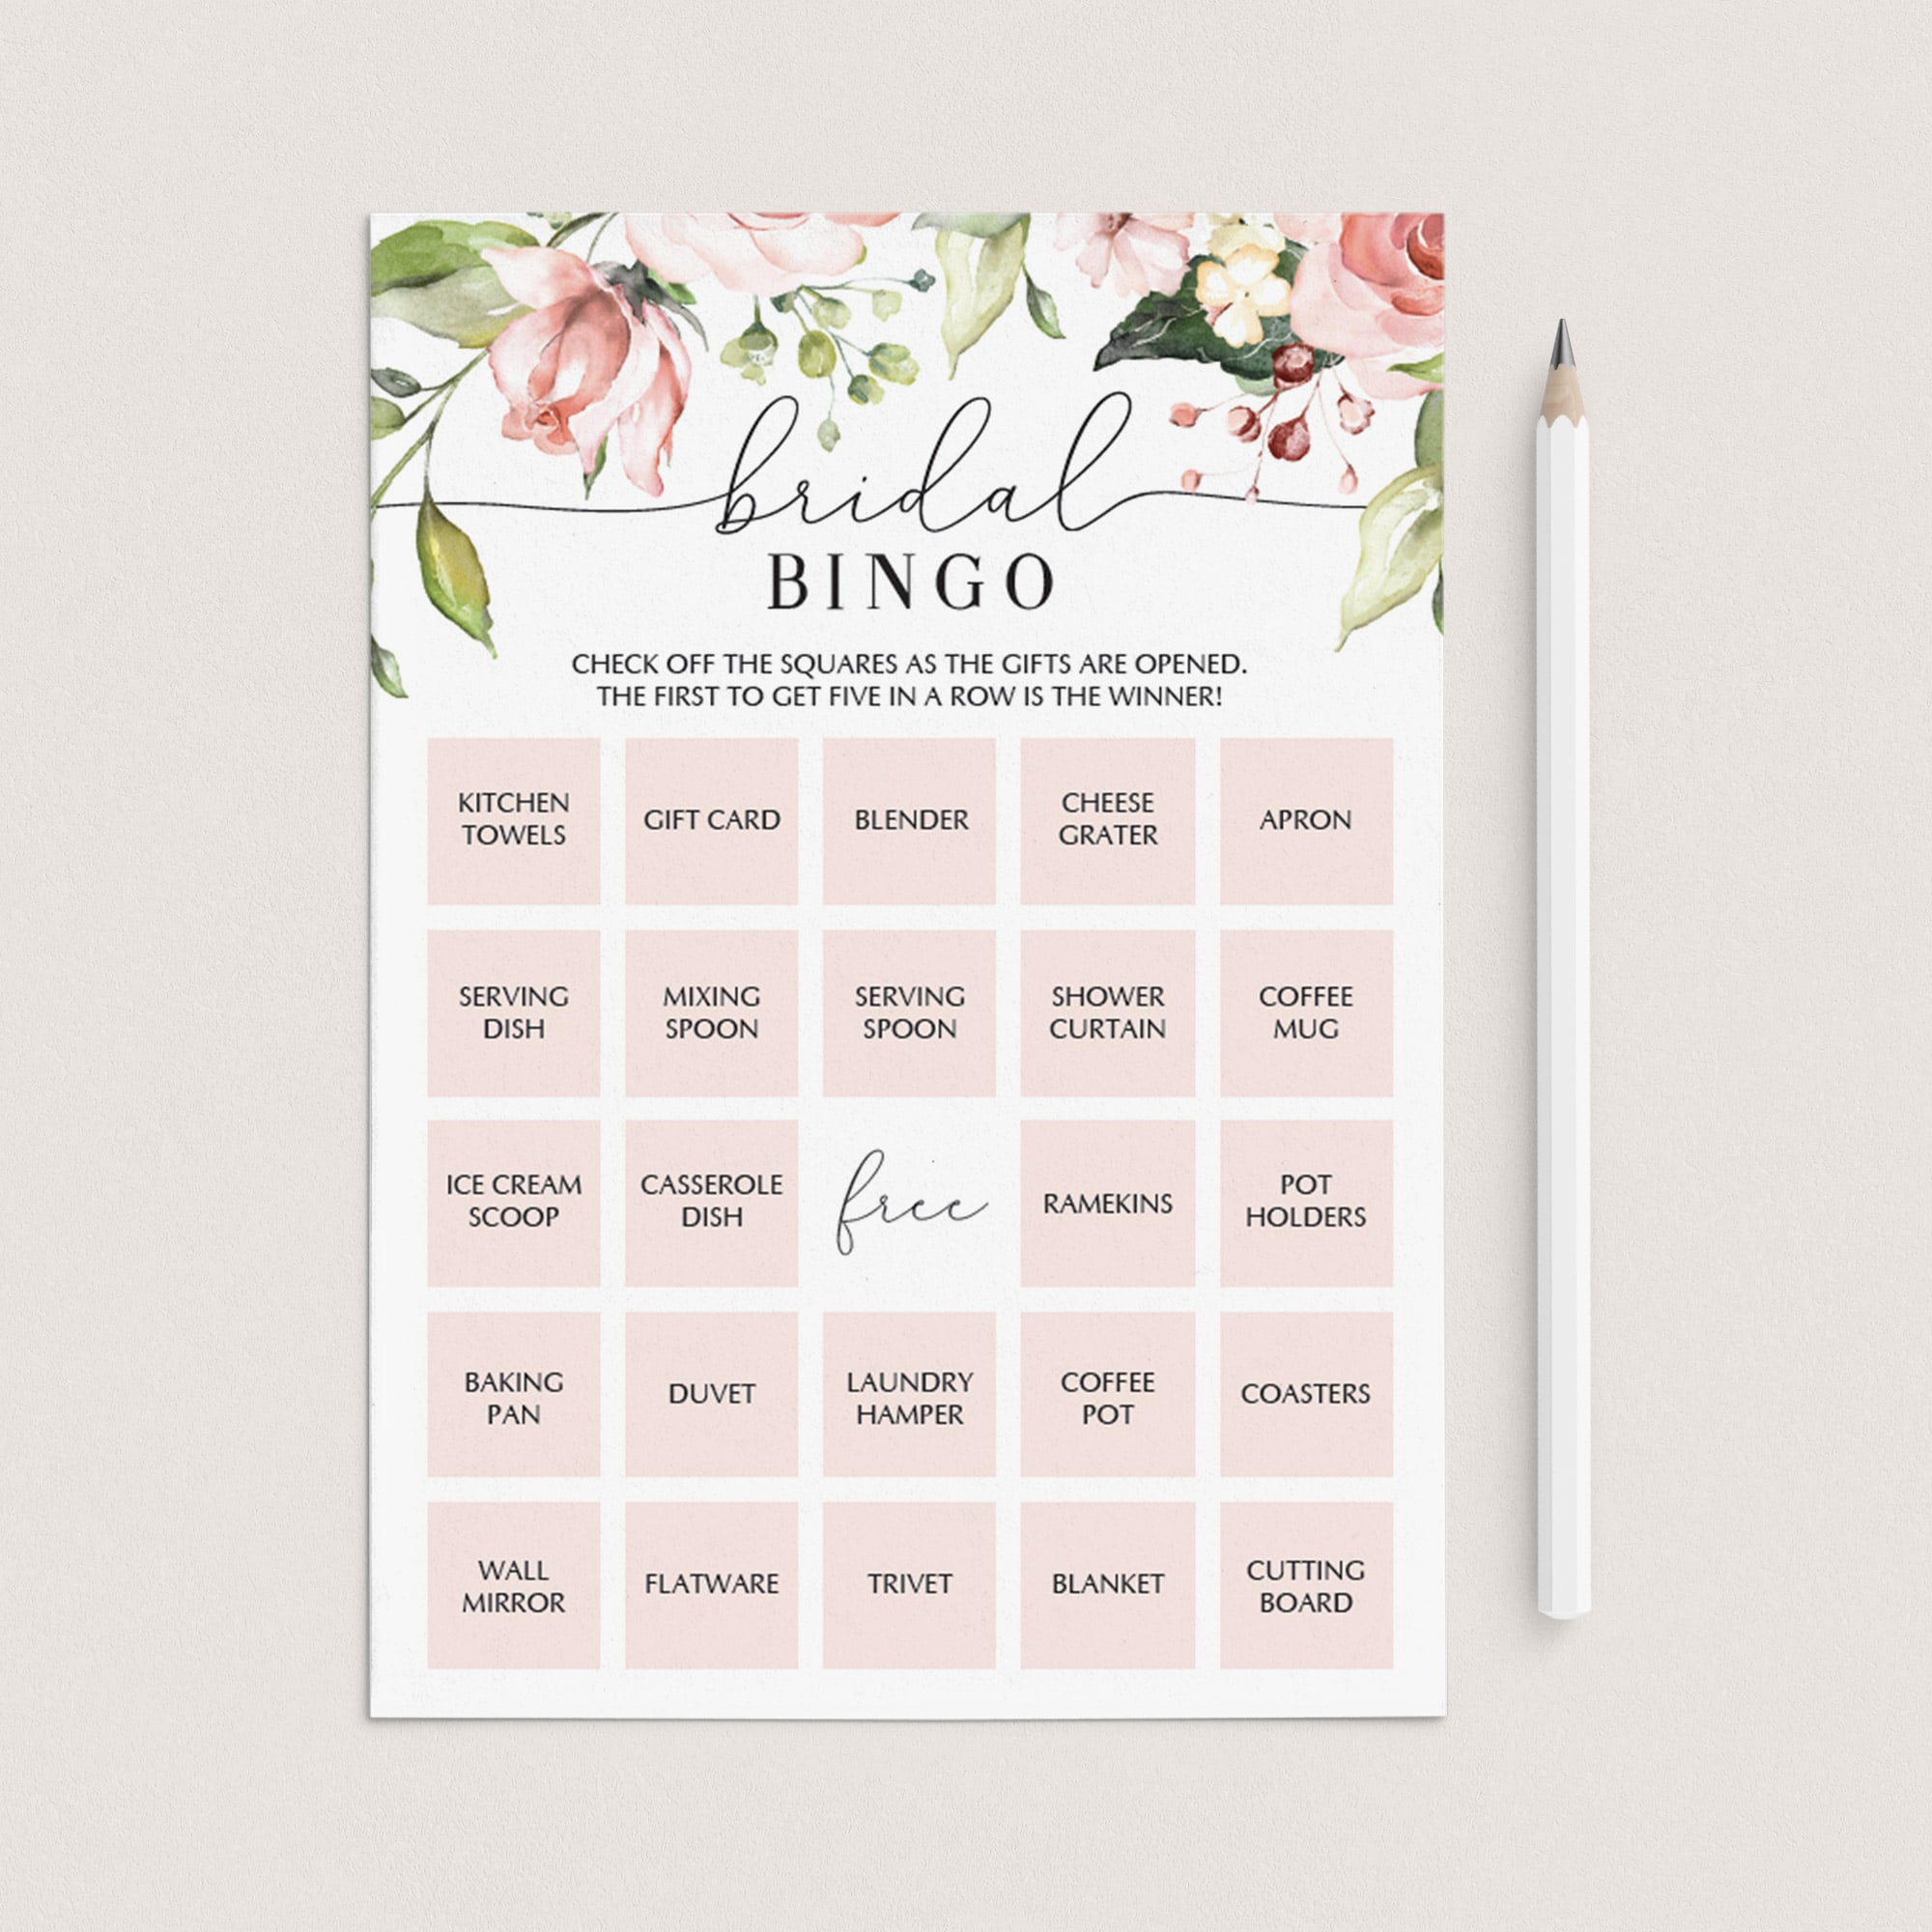 Editable bridal shower bingo game cards by LittleSizzle